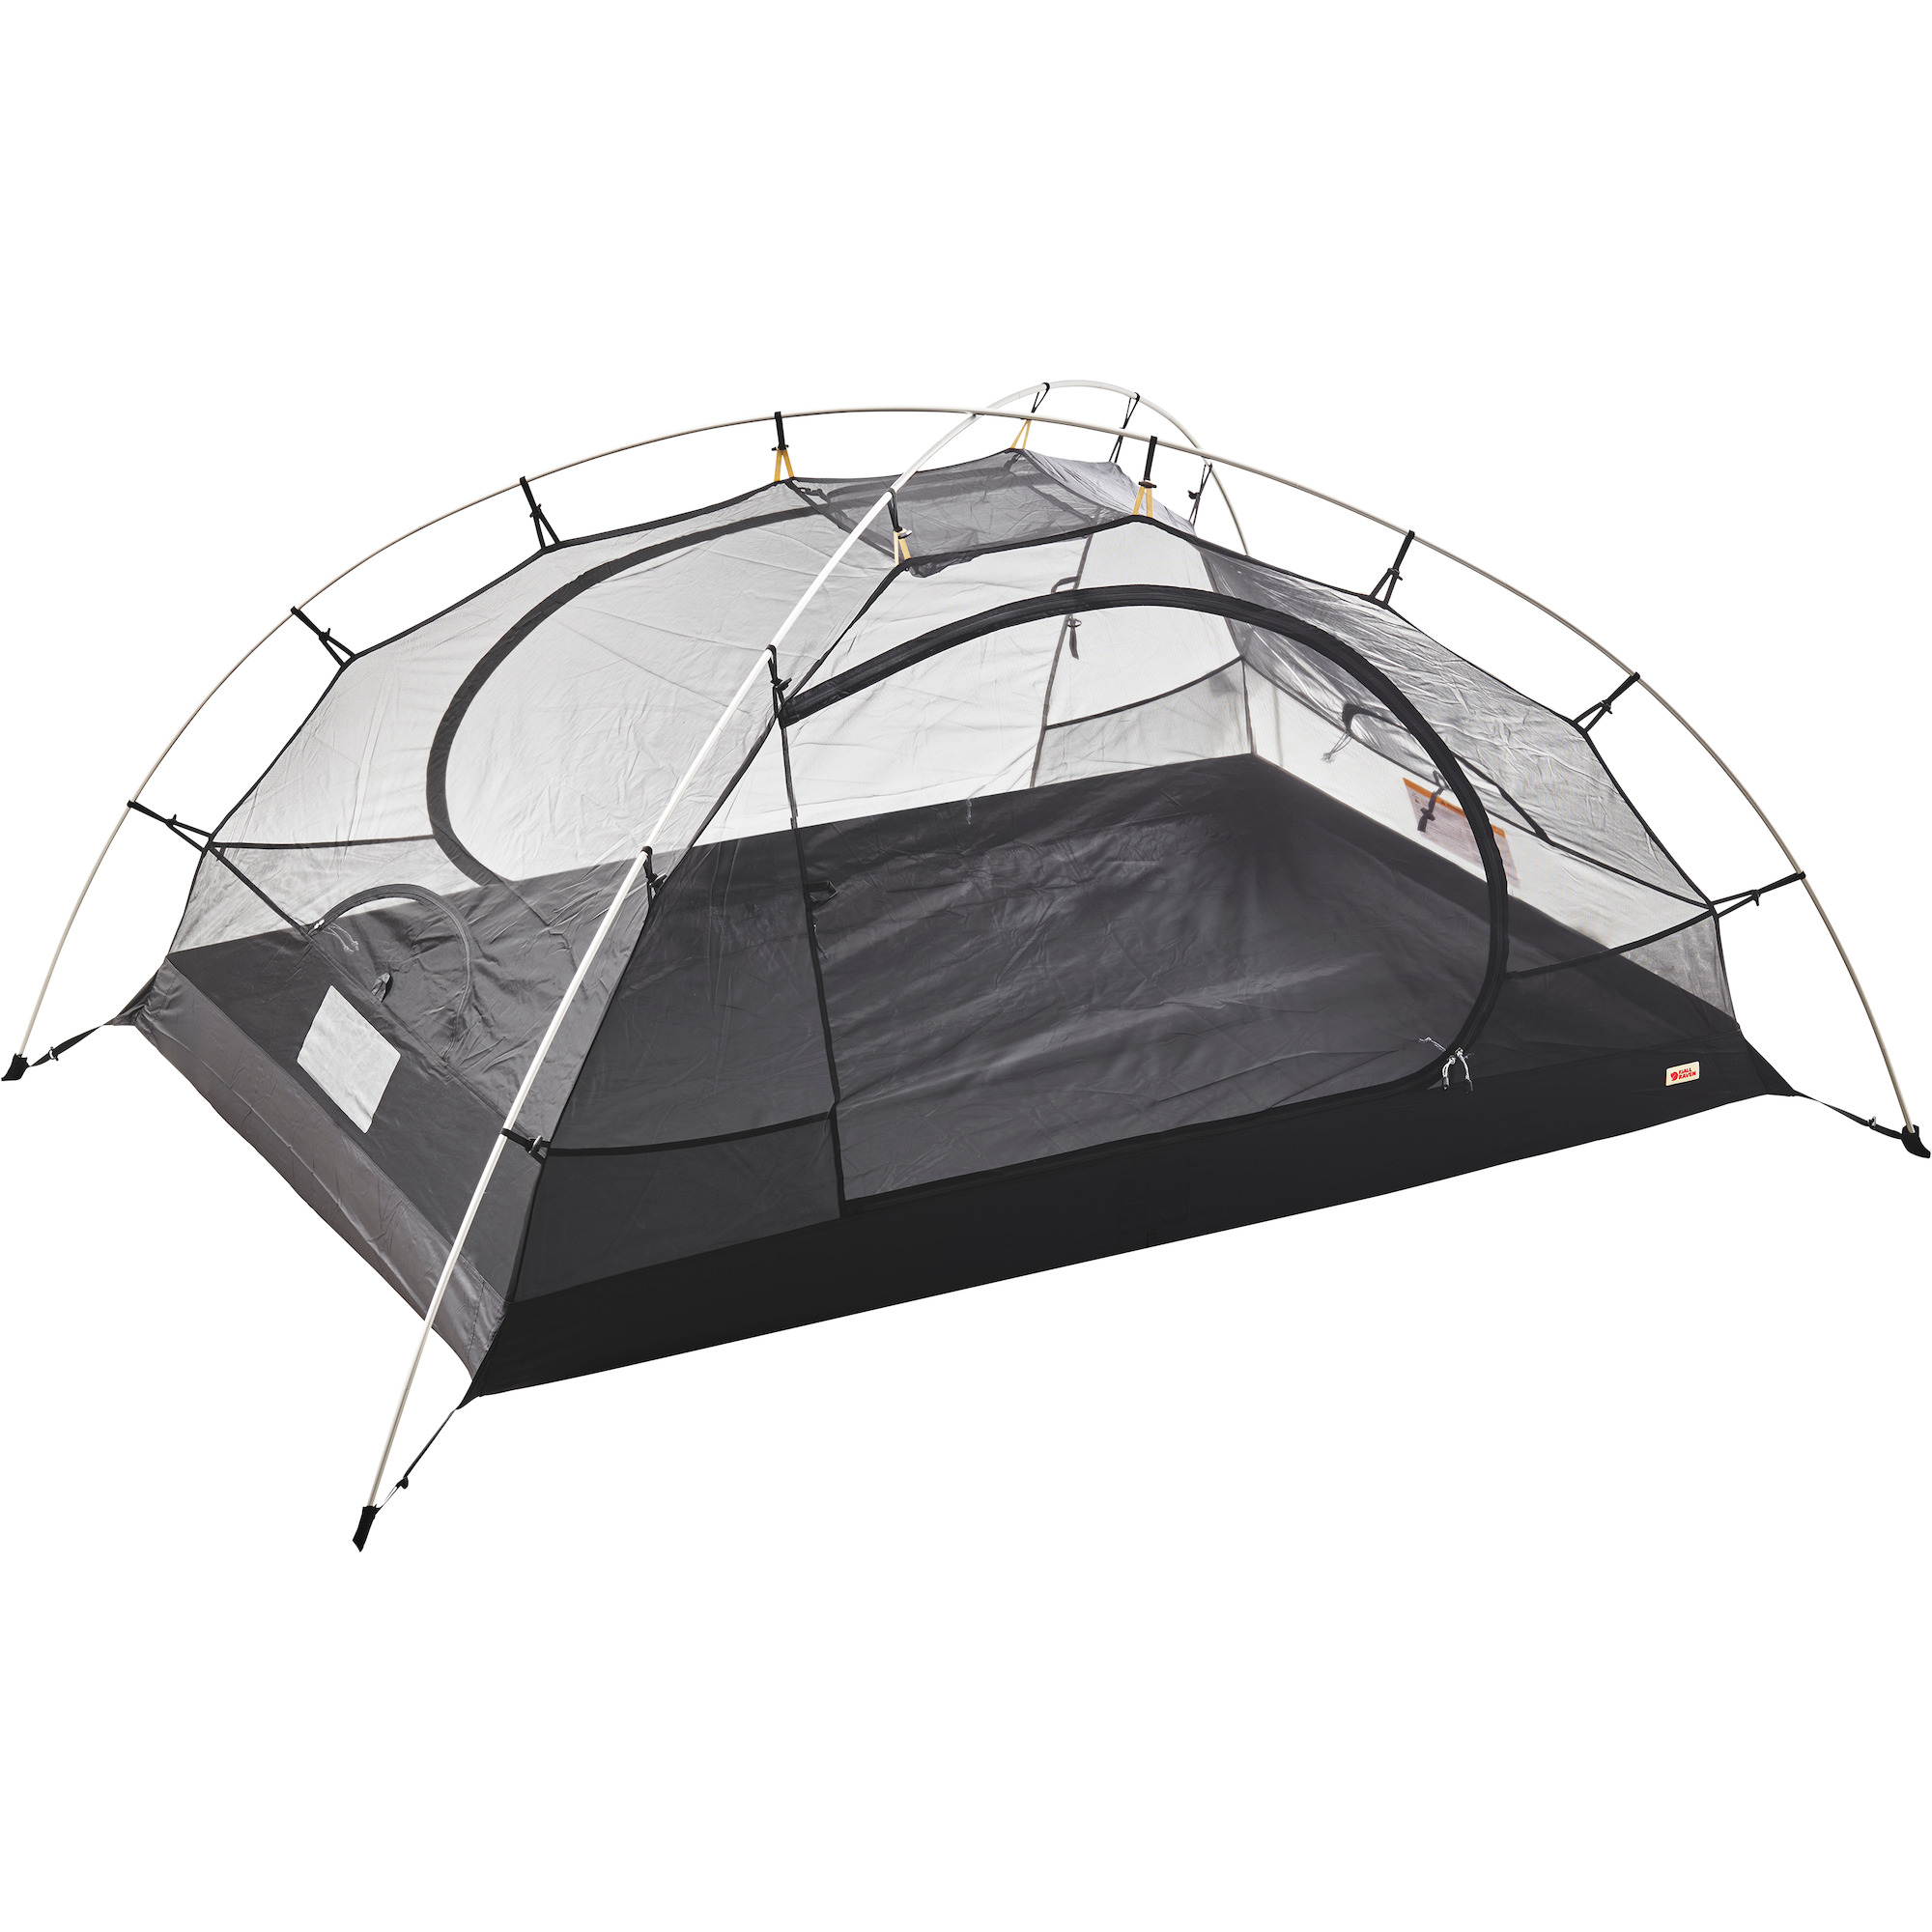 lied Oprechtheid Mok Fjallraven Mesh Inner Tent Dome 2 | Backpacking Tents | CampSaver.com